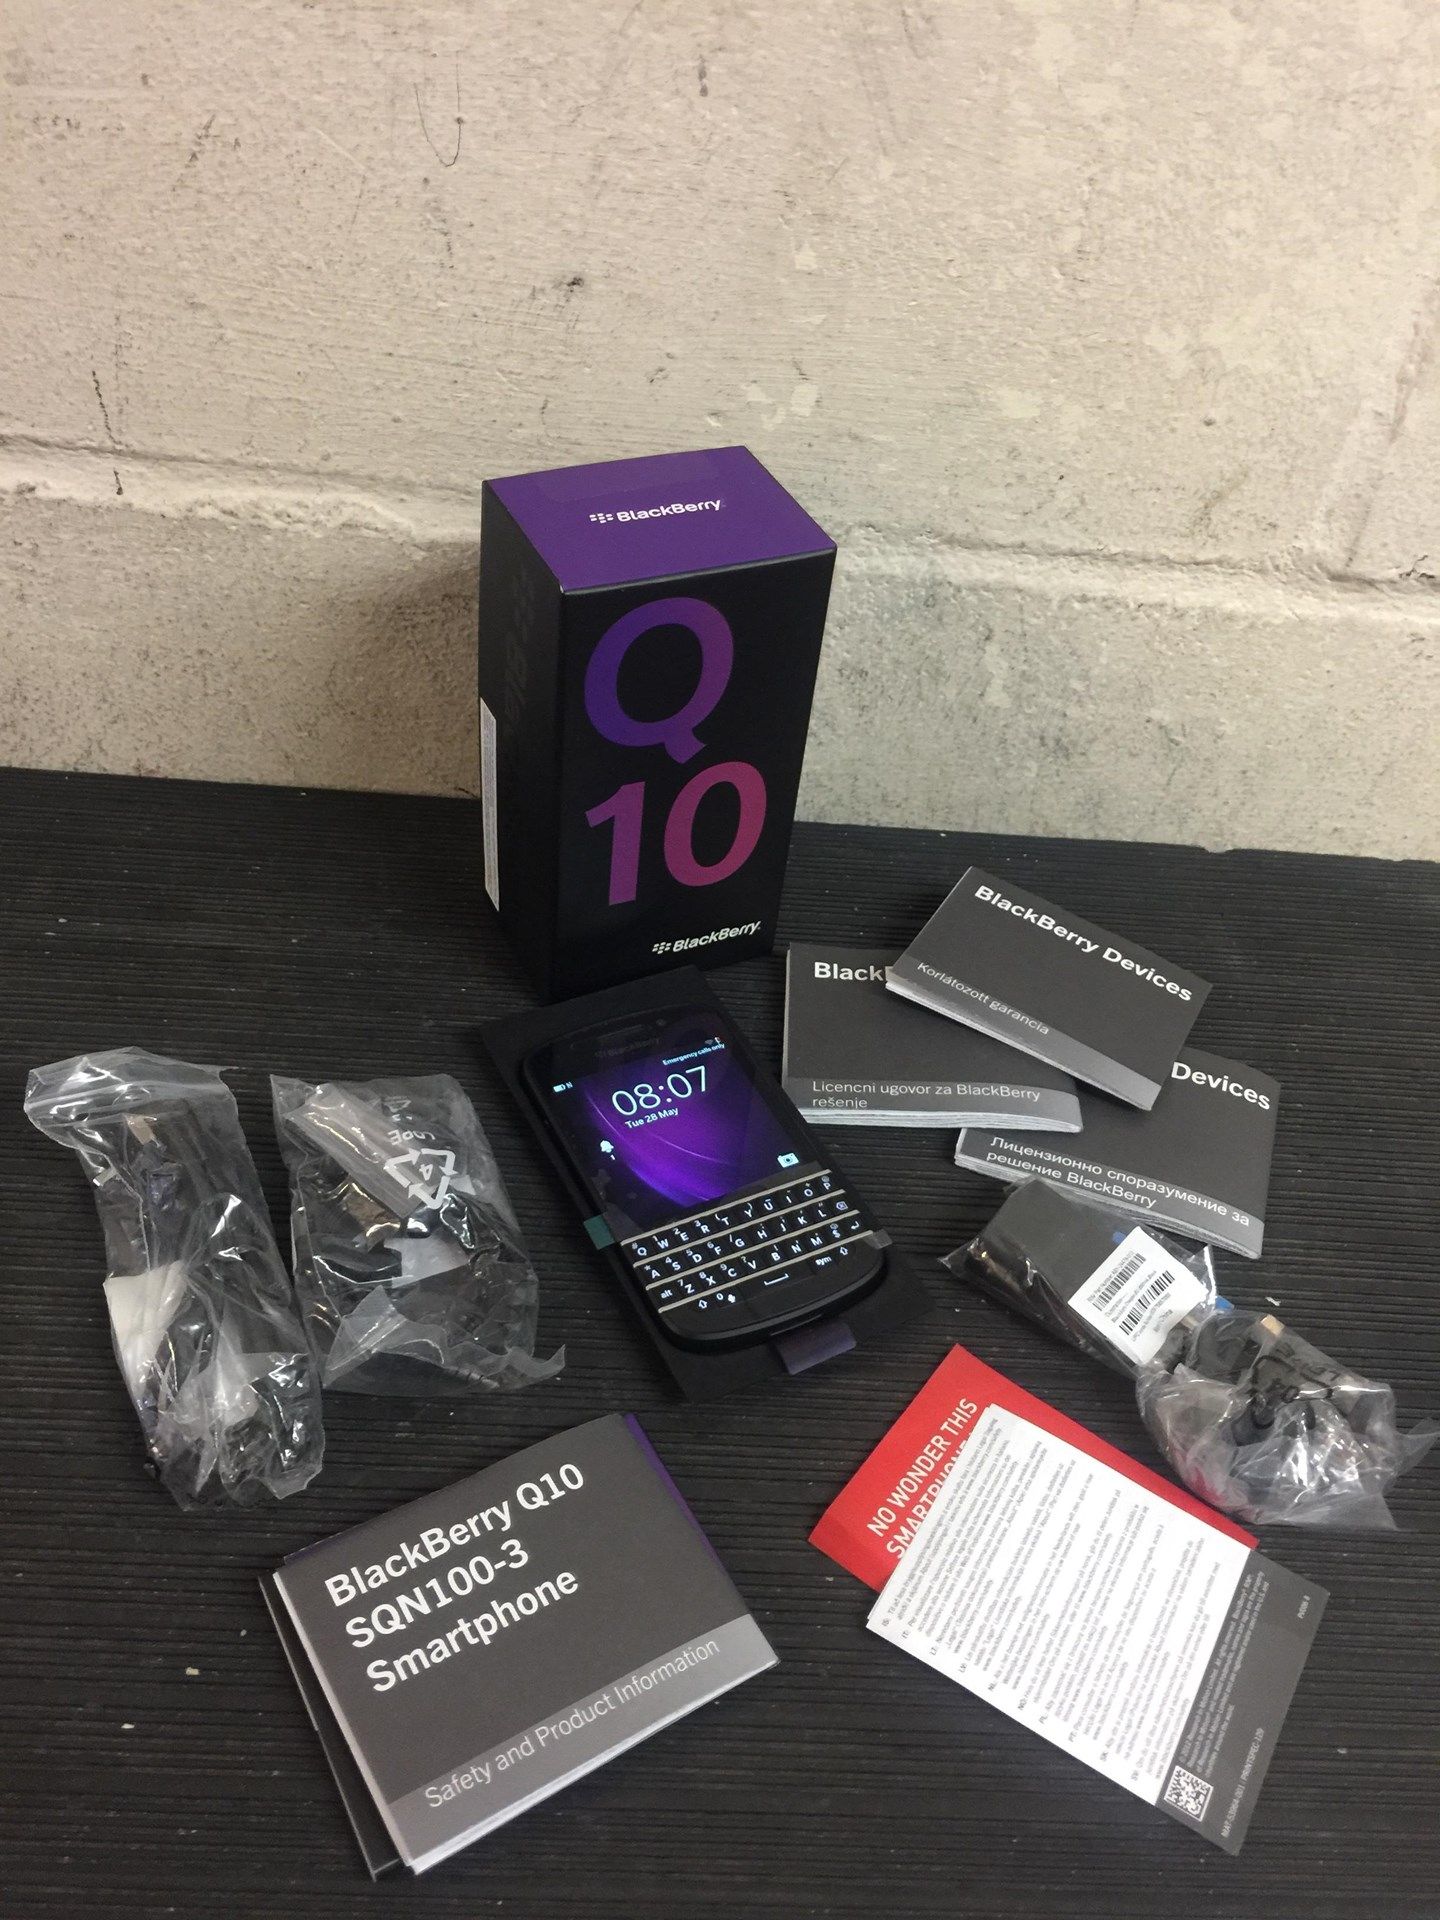 Blackberry Q10 Smartphone RRP £175.99